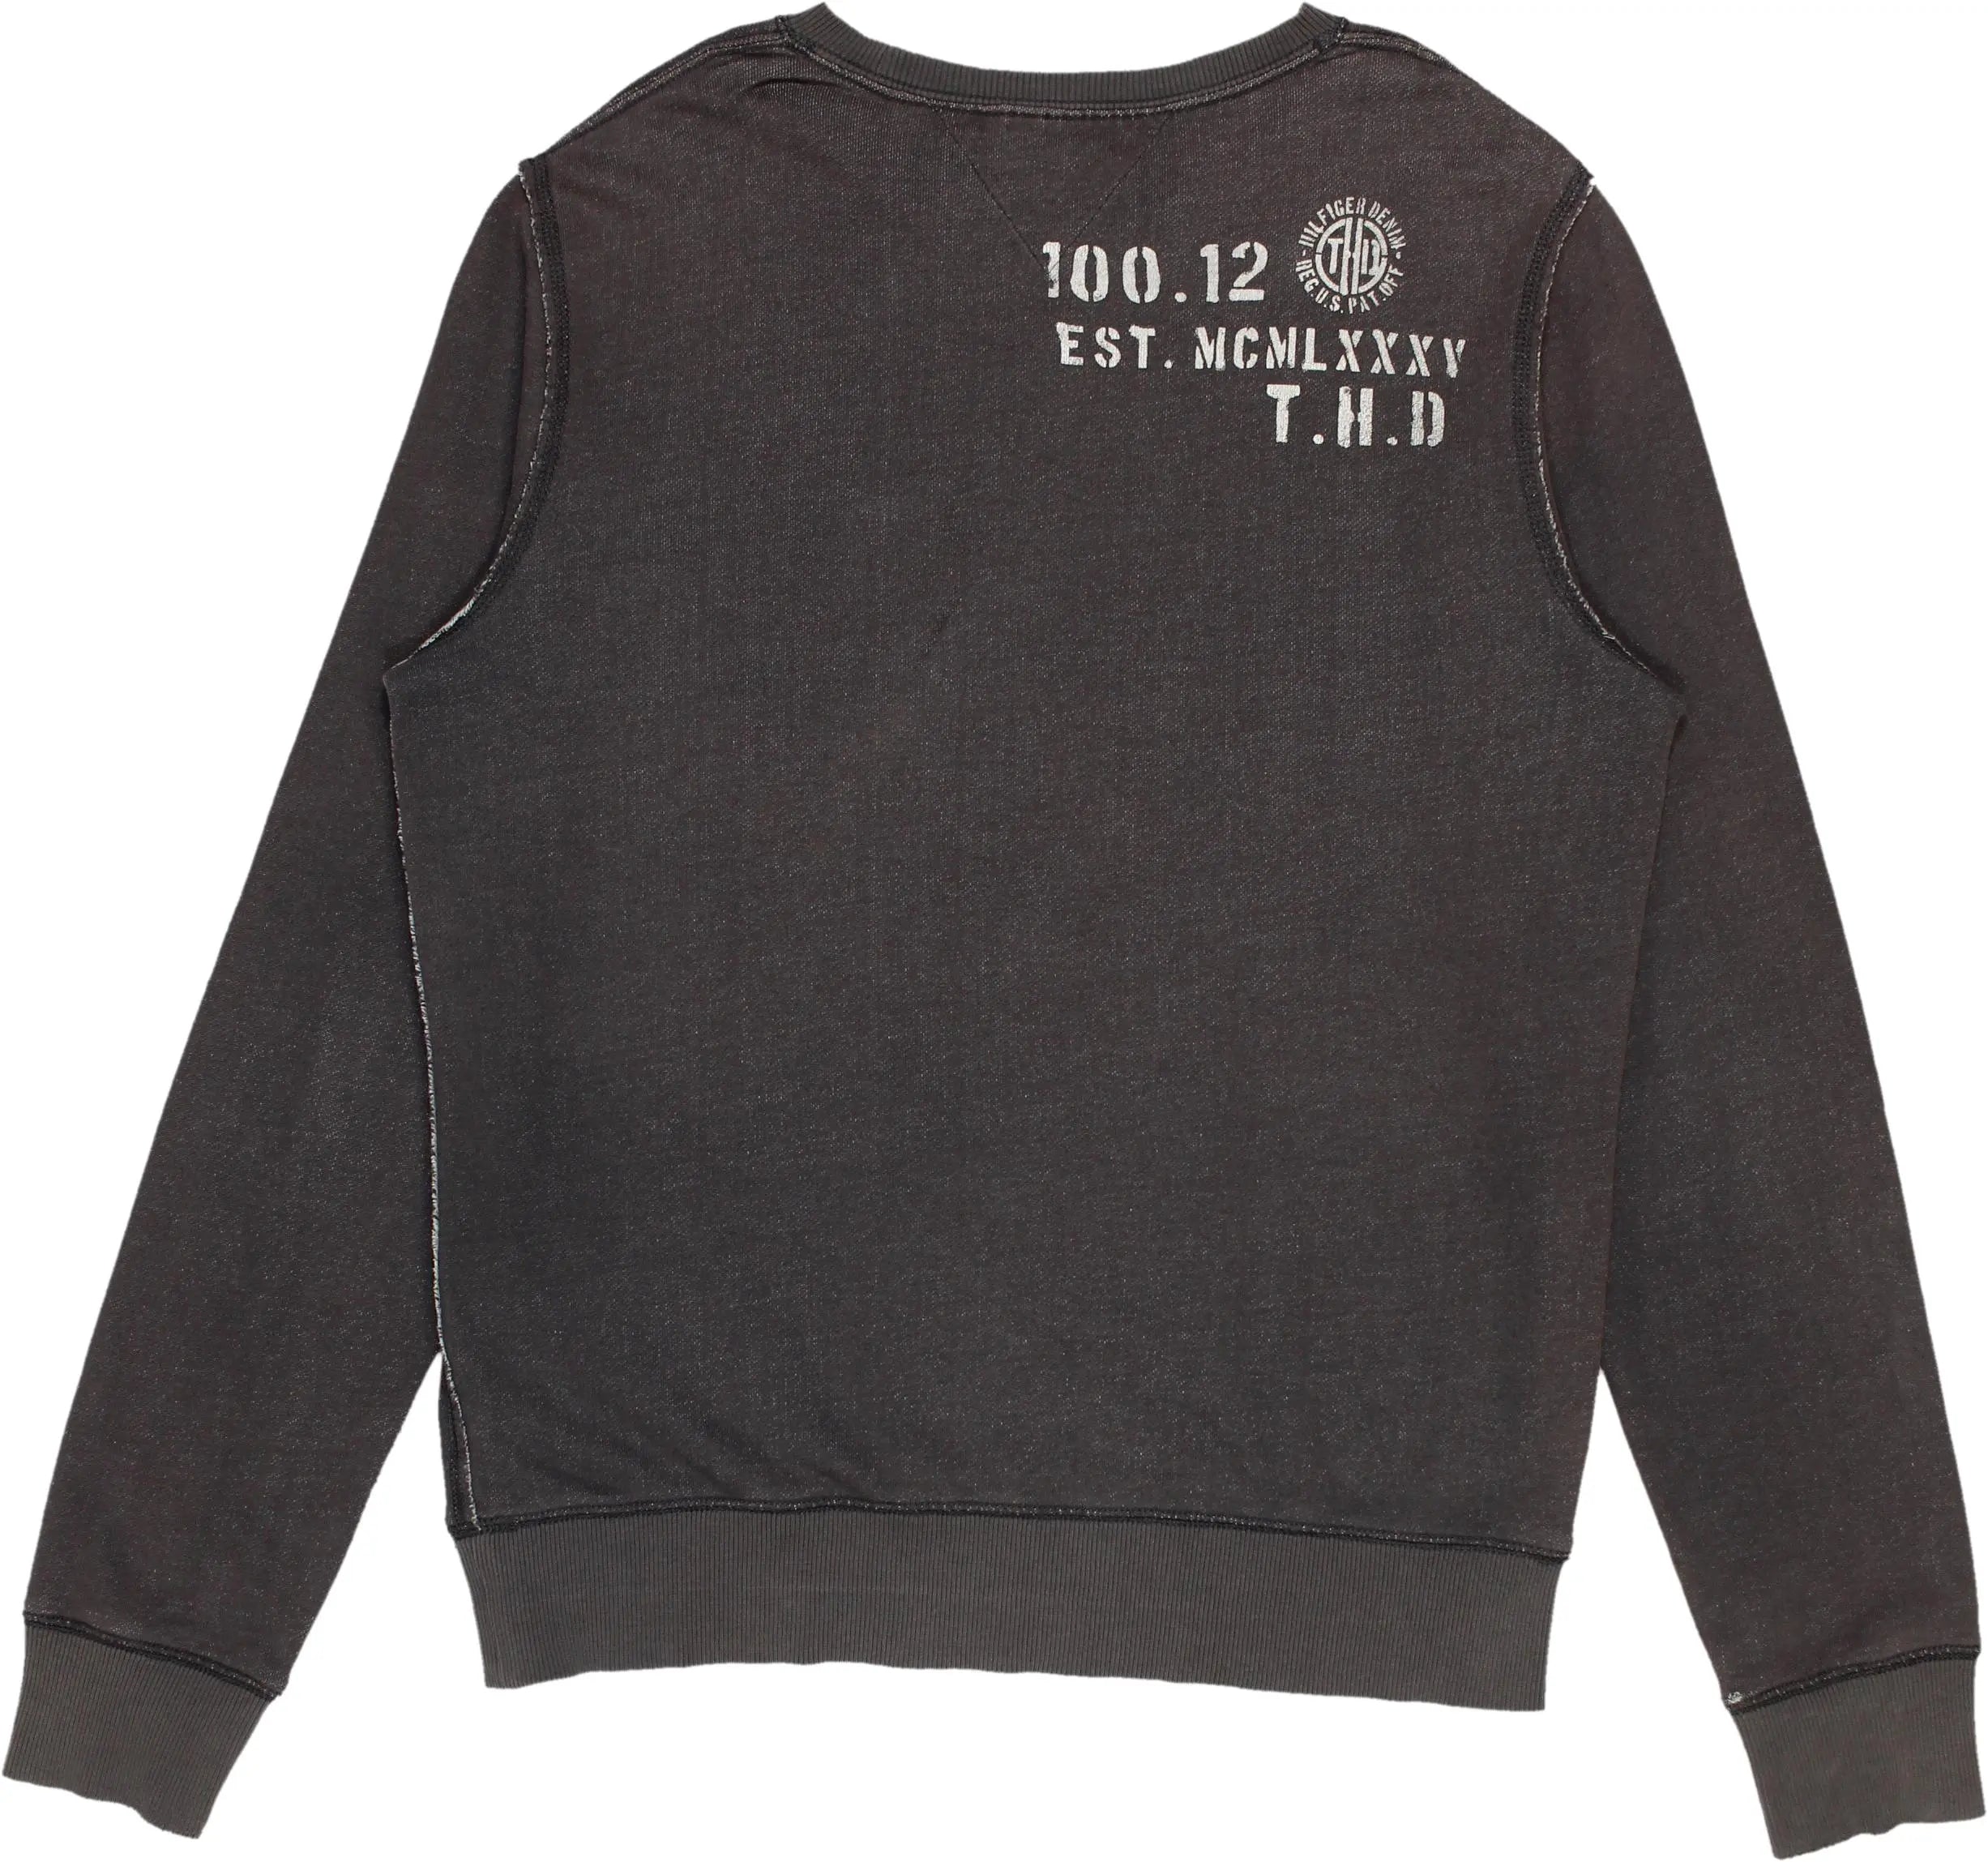 Tommy Hilfiger - Hilfiger Denim Sweater- ThriftTale.com - Vintage and second handclothing